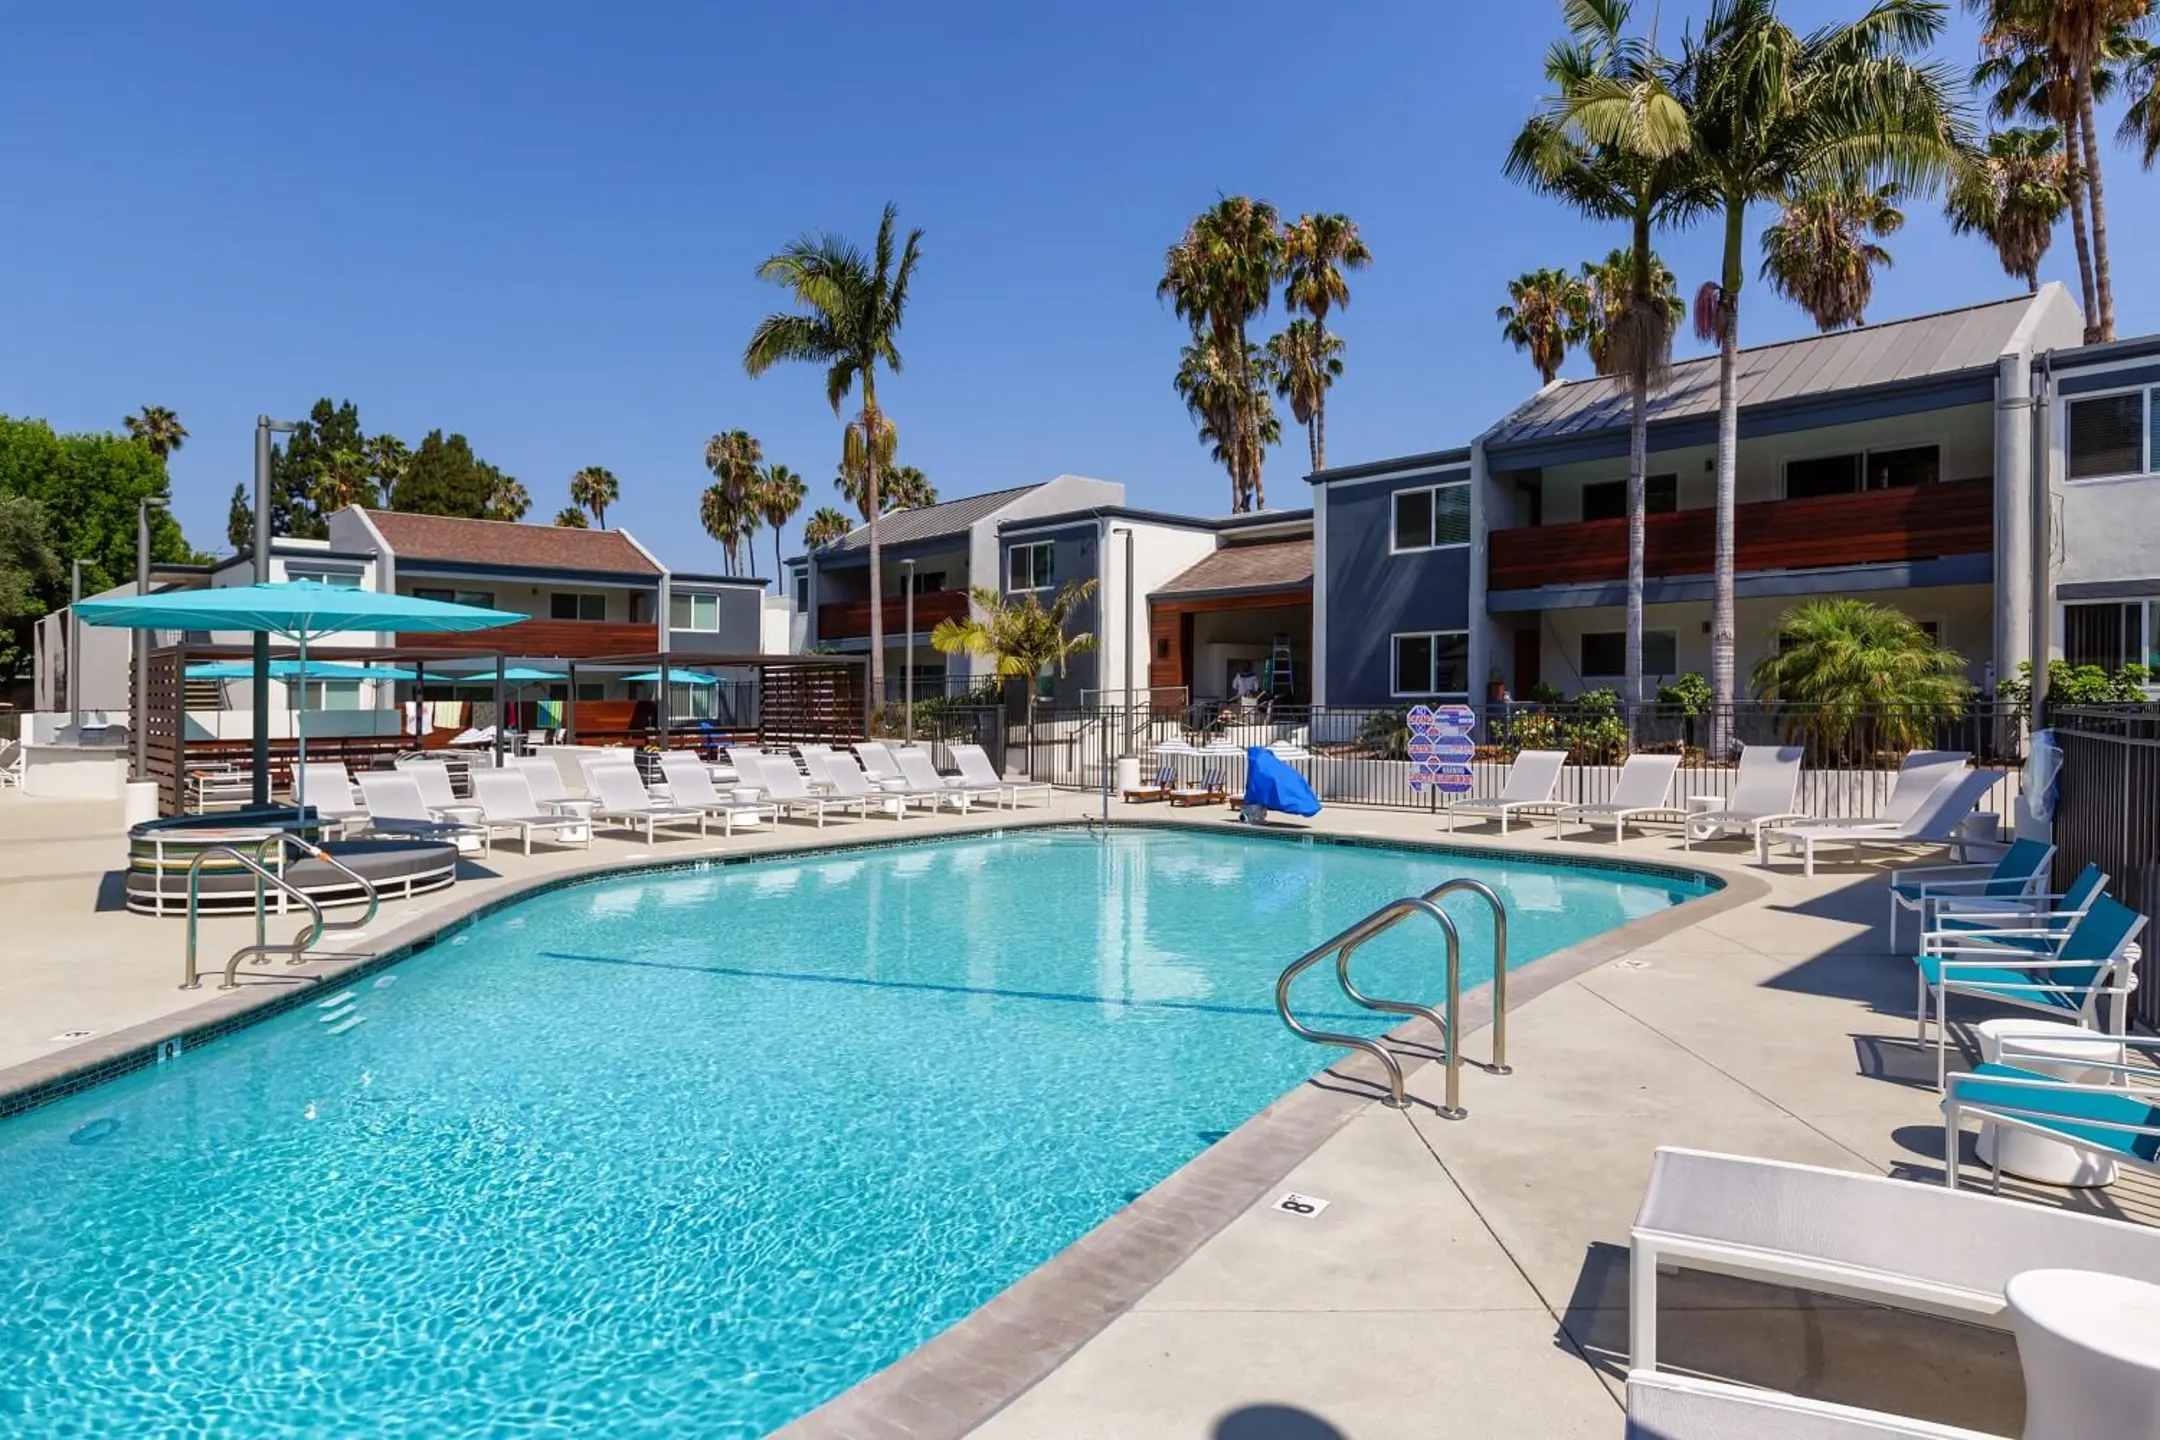 Pool - Beverly Plaza Apartments - Long Beach, CA